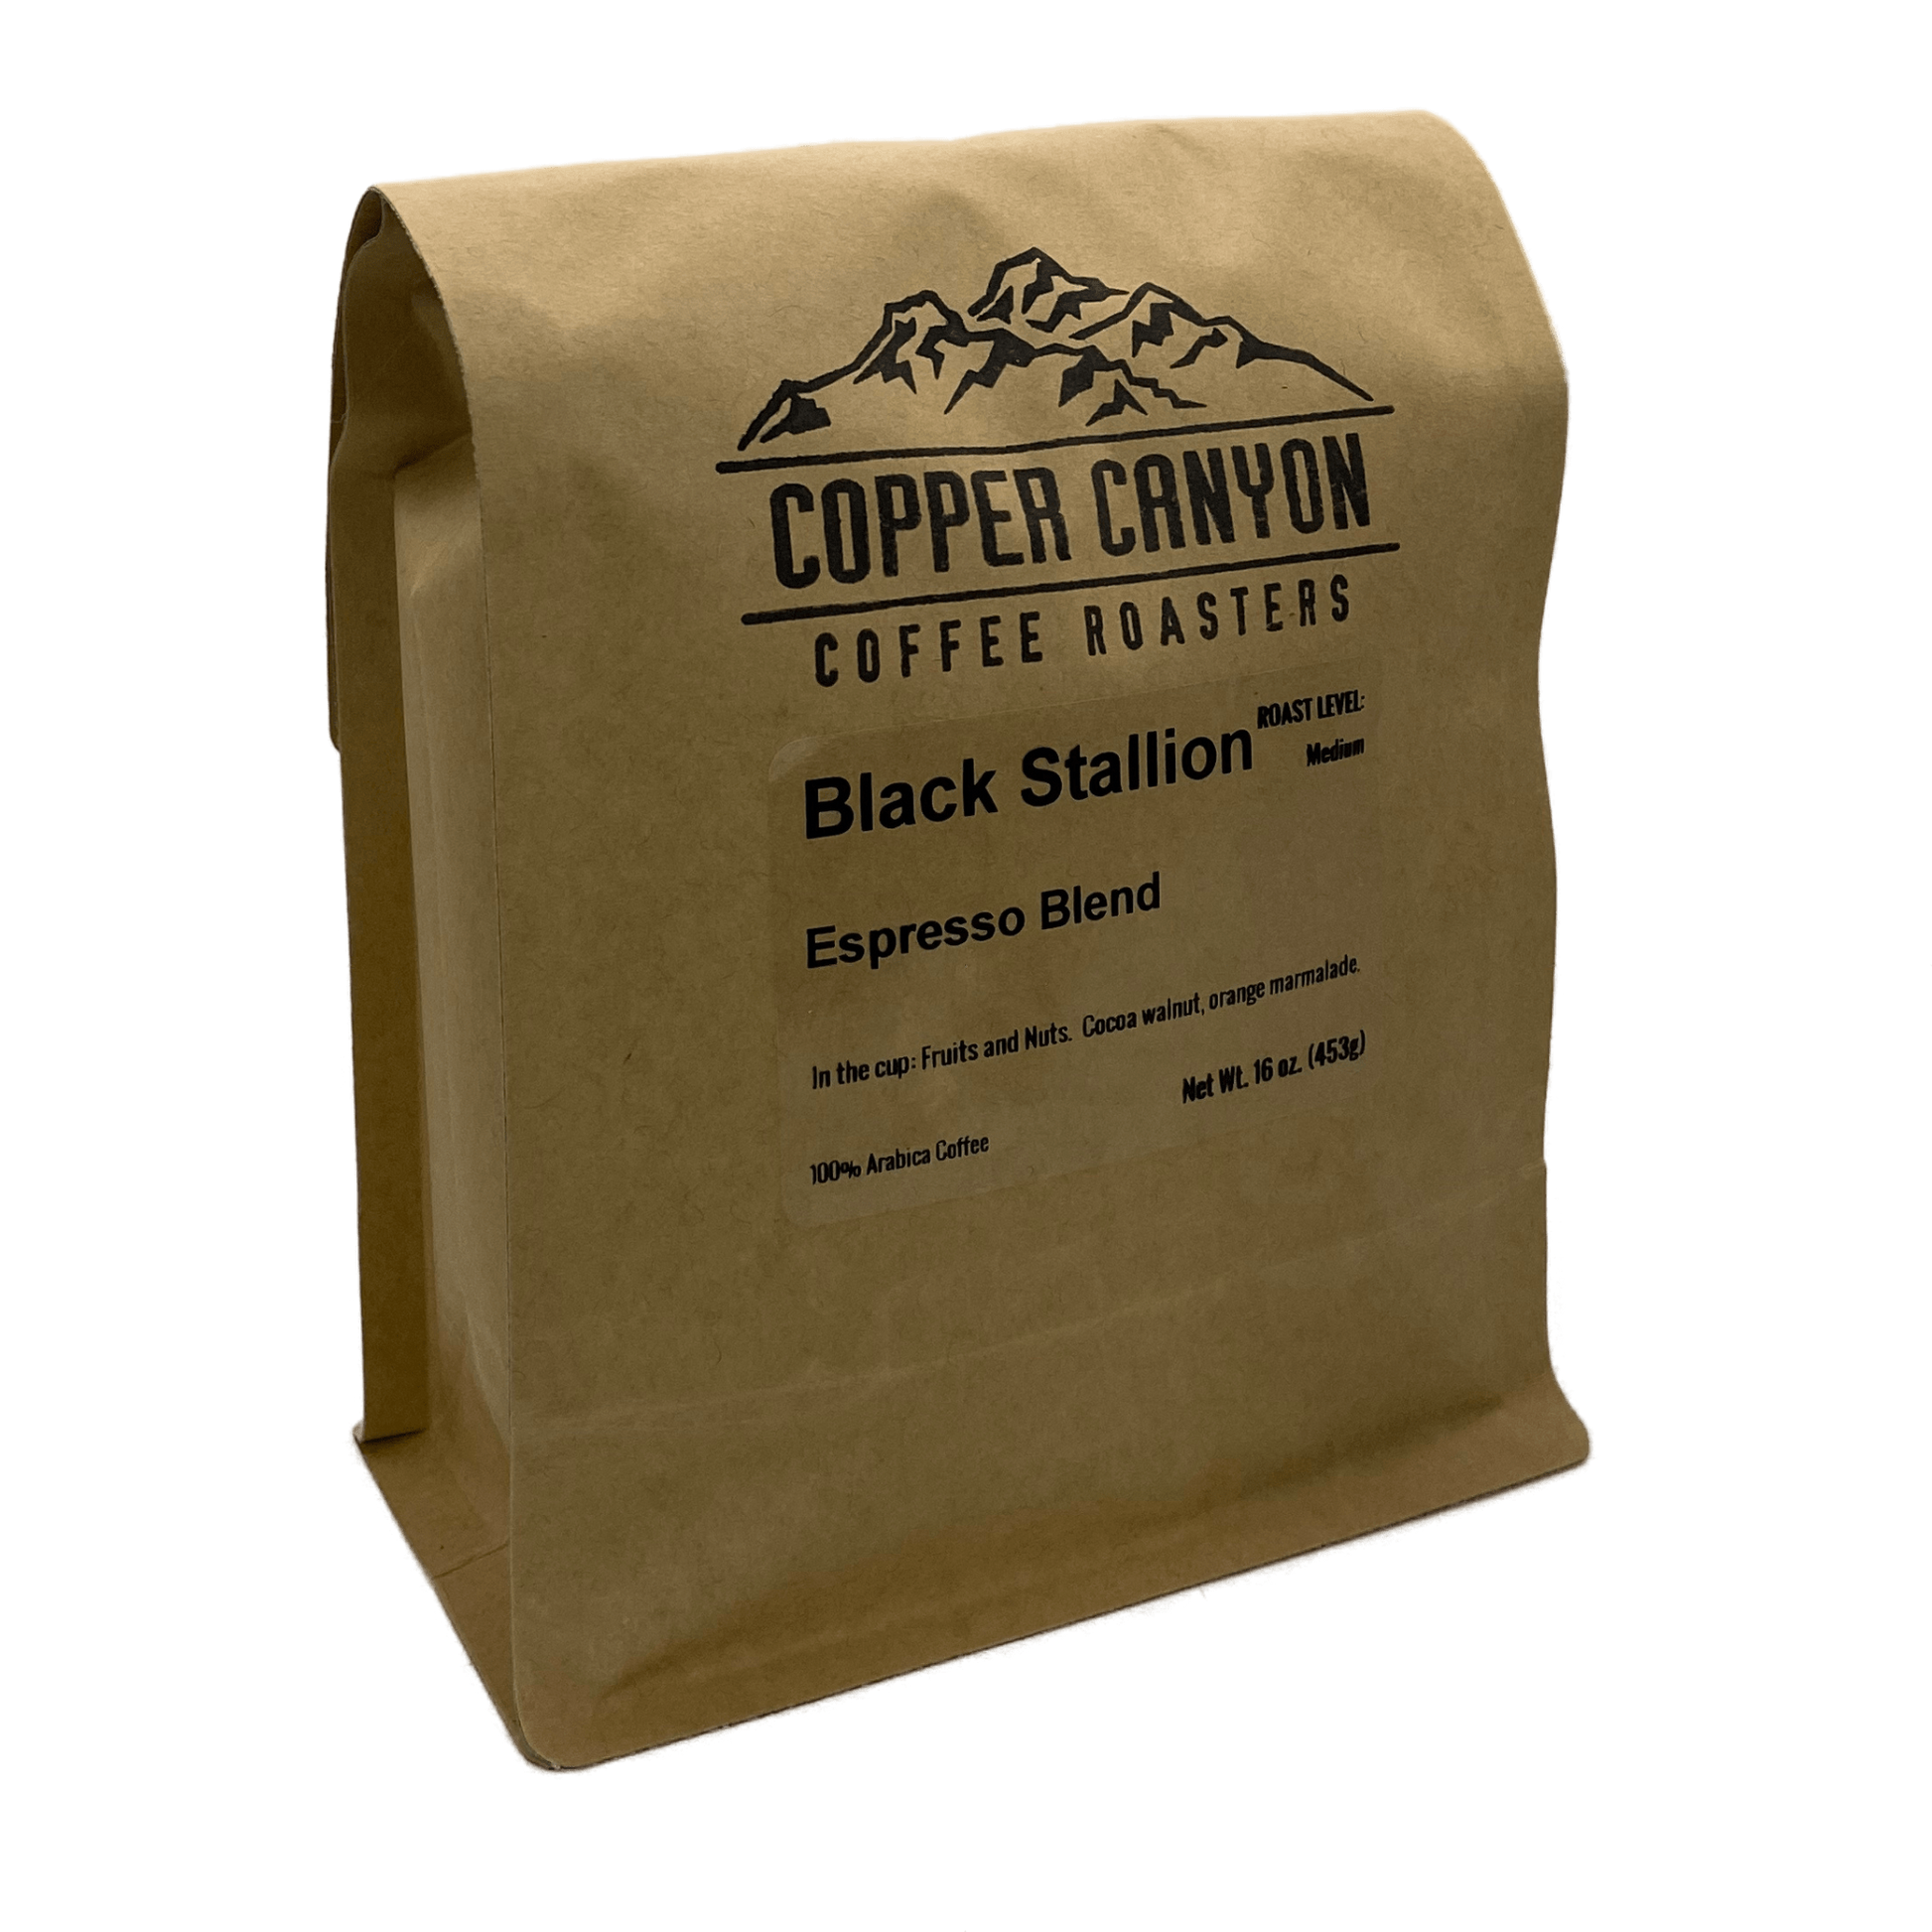 16 oz bag of Black Stallion Espresso Blend, medium roast coffee